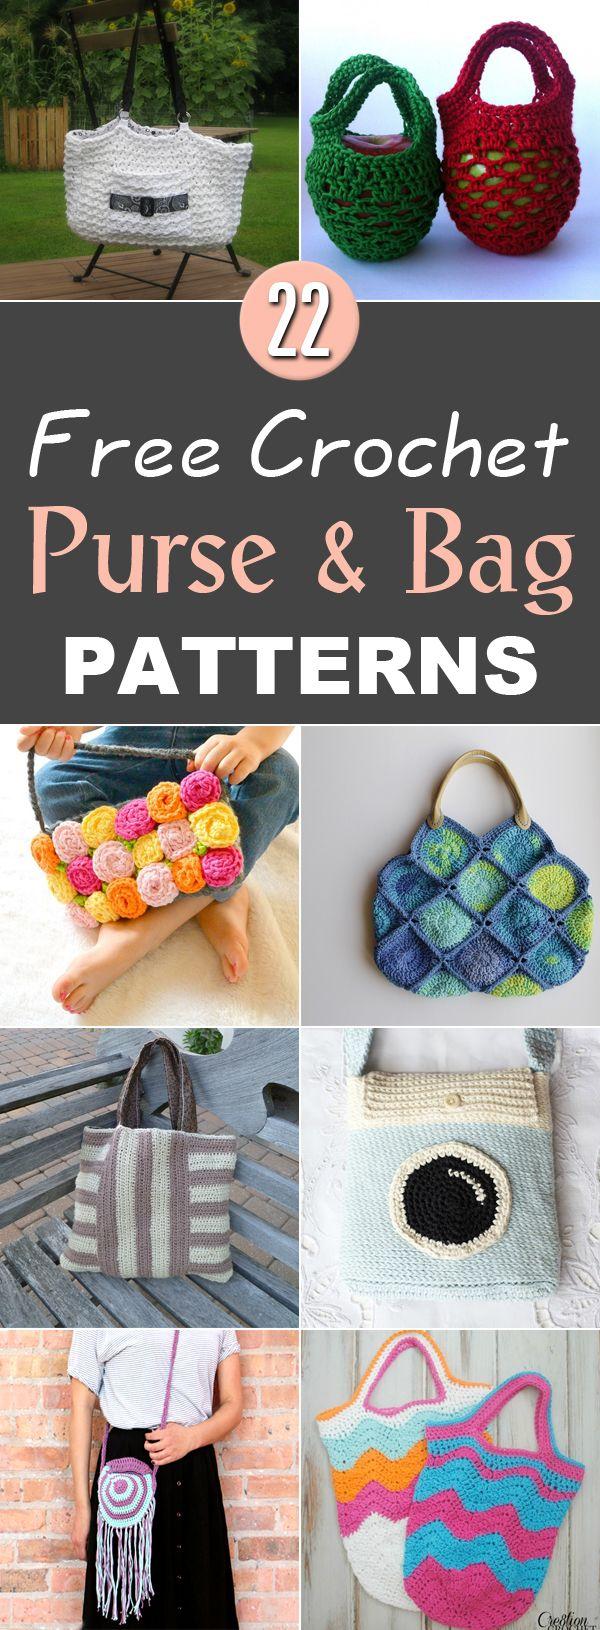 Mariage - 22 Free Crochet Purse & Bag Patterns